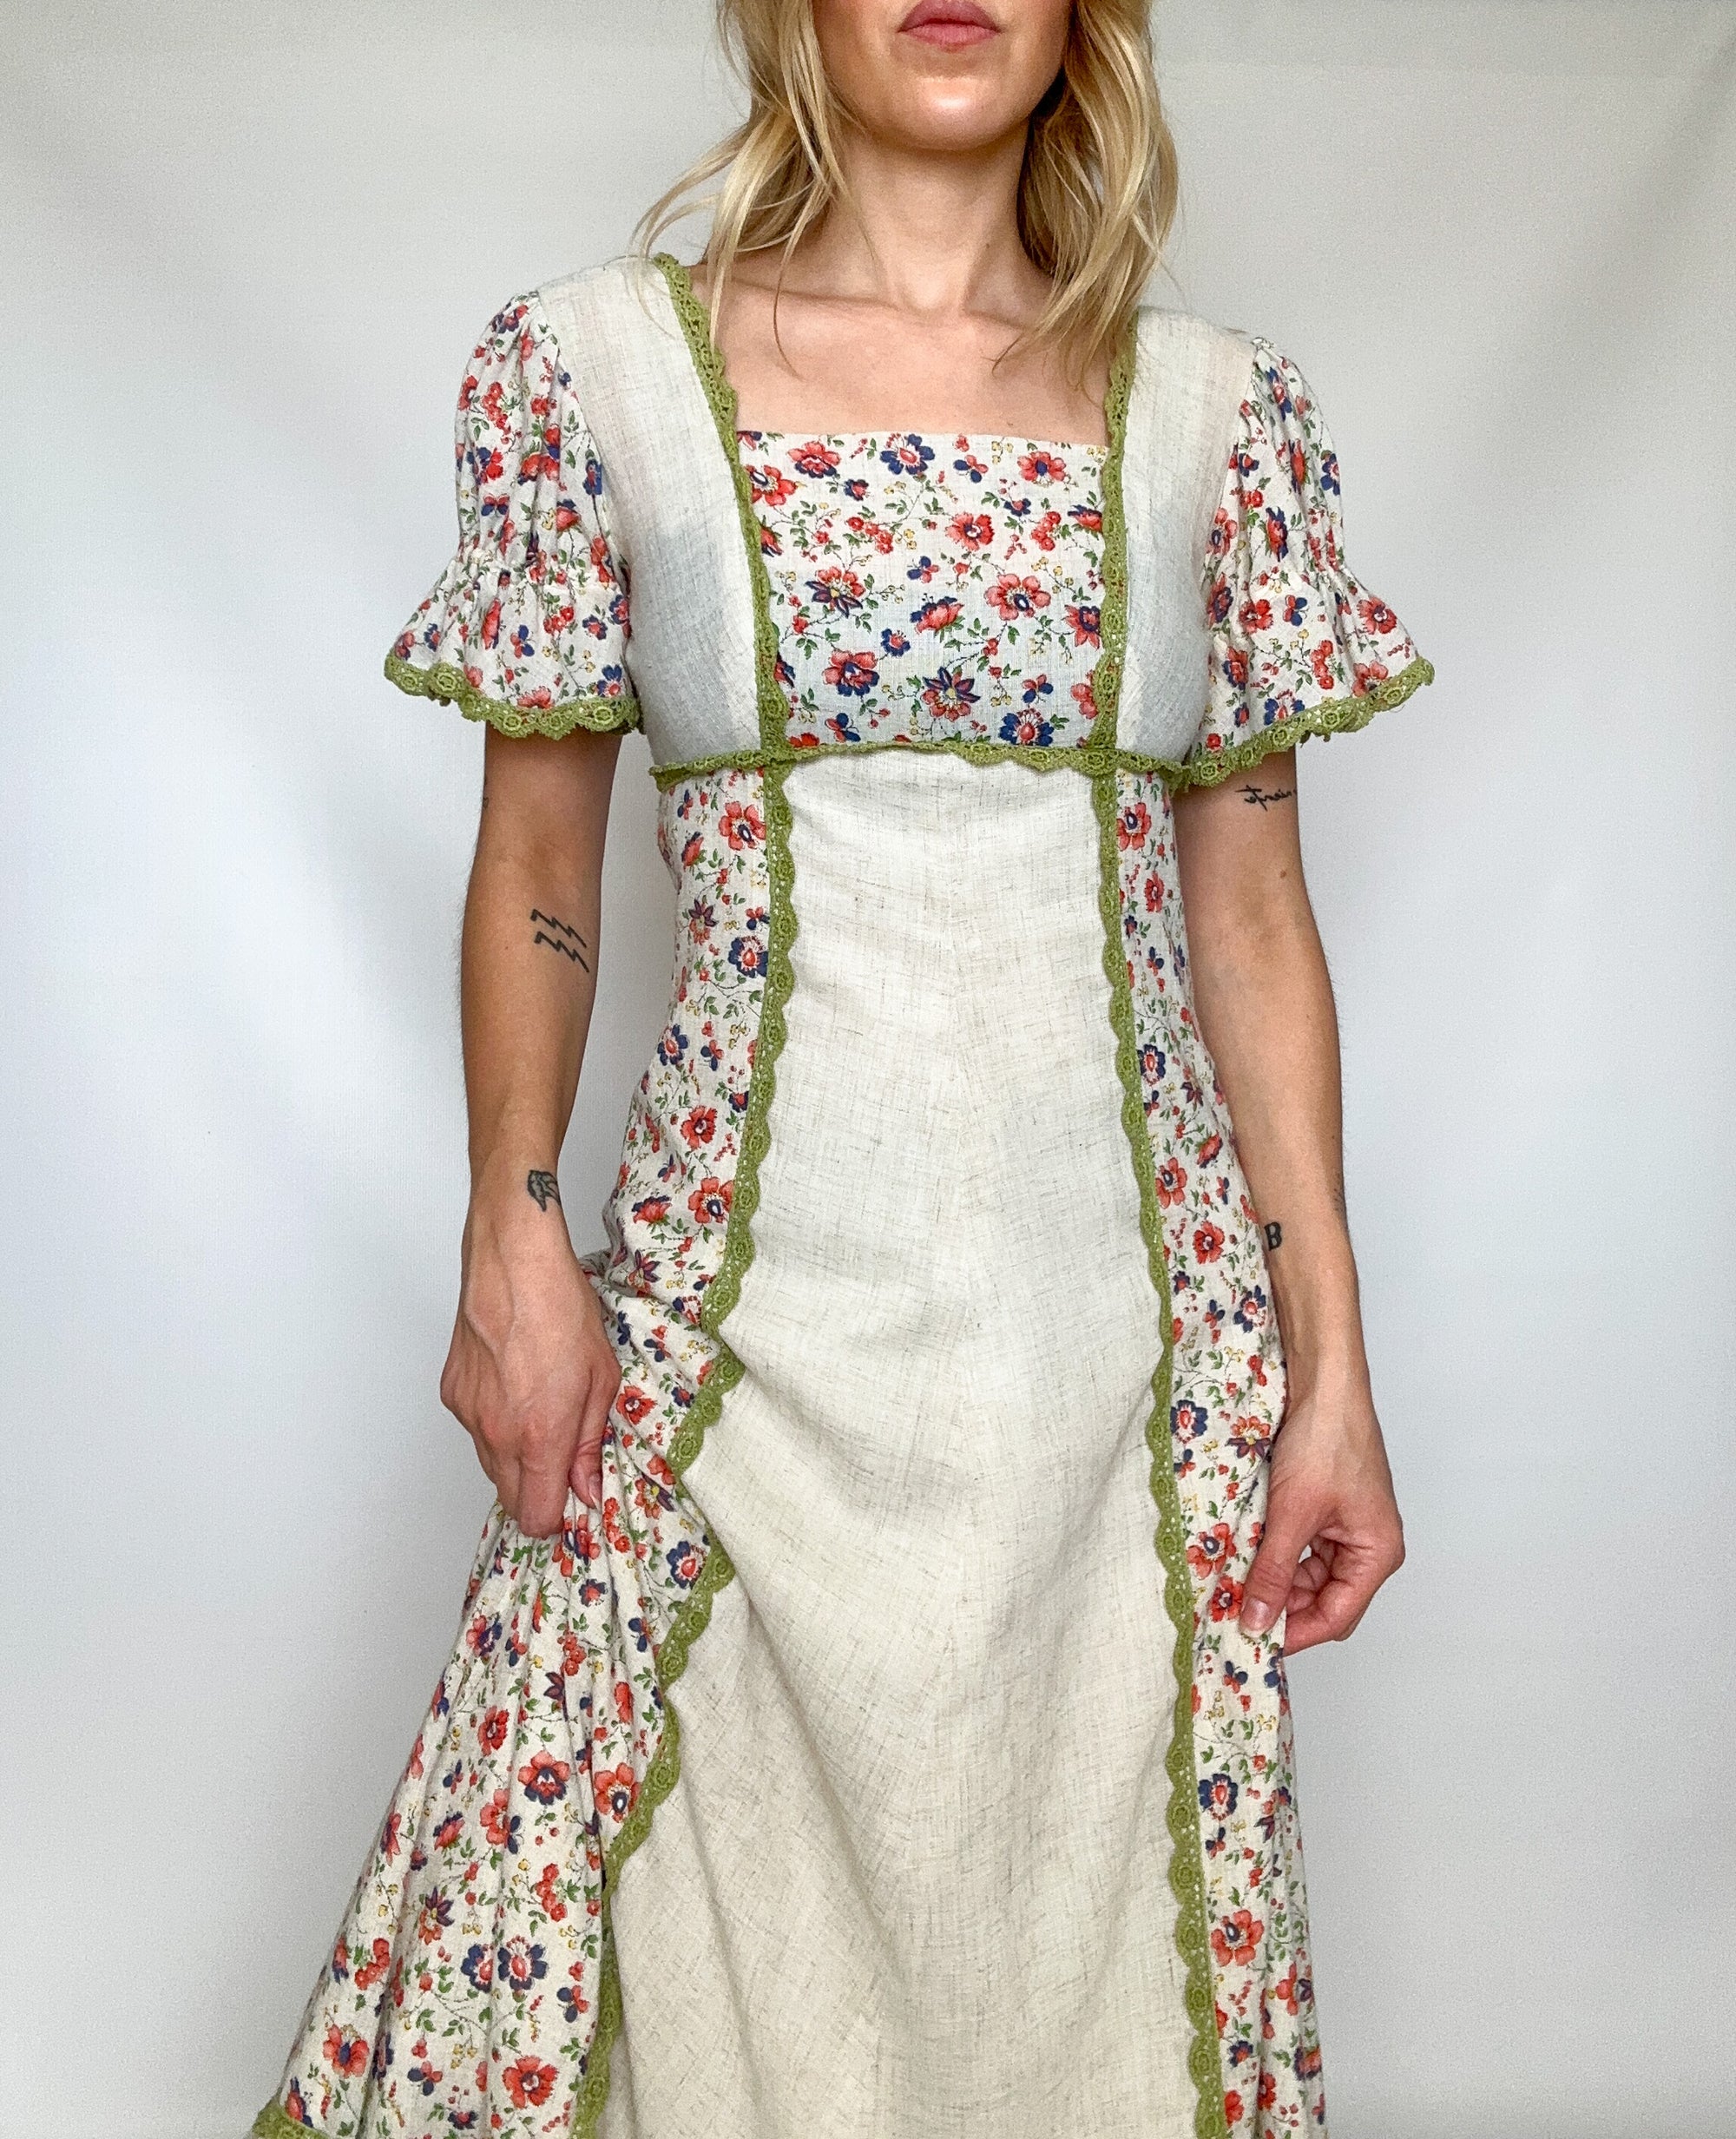 Handmade Prairie Dress